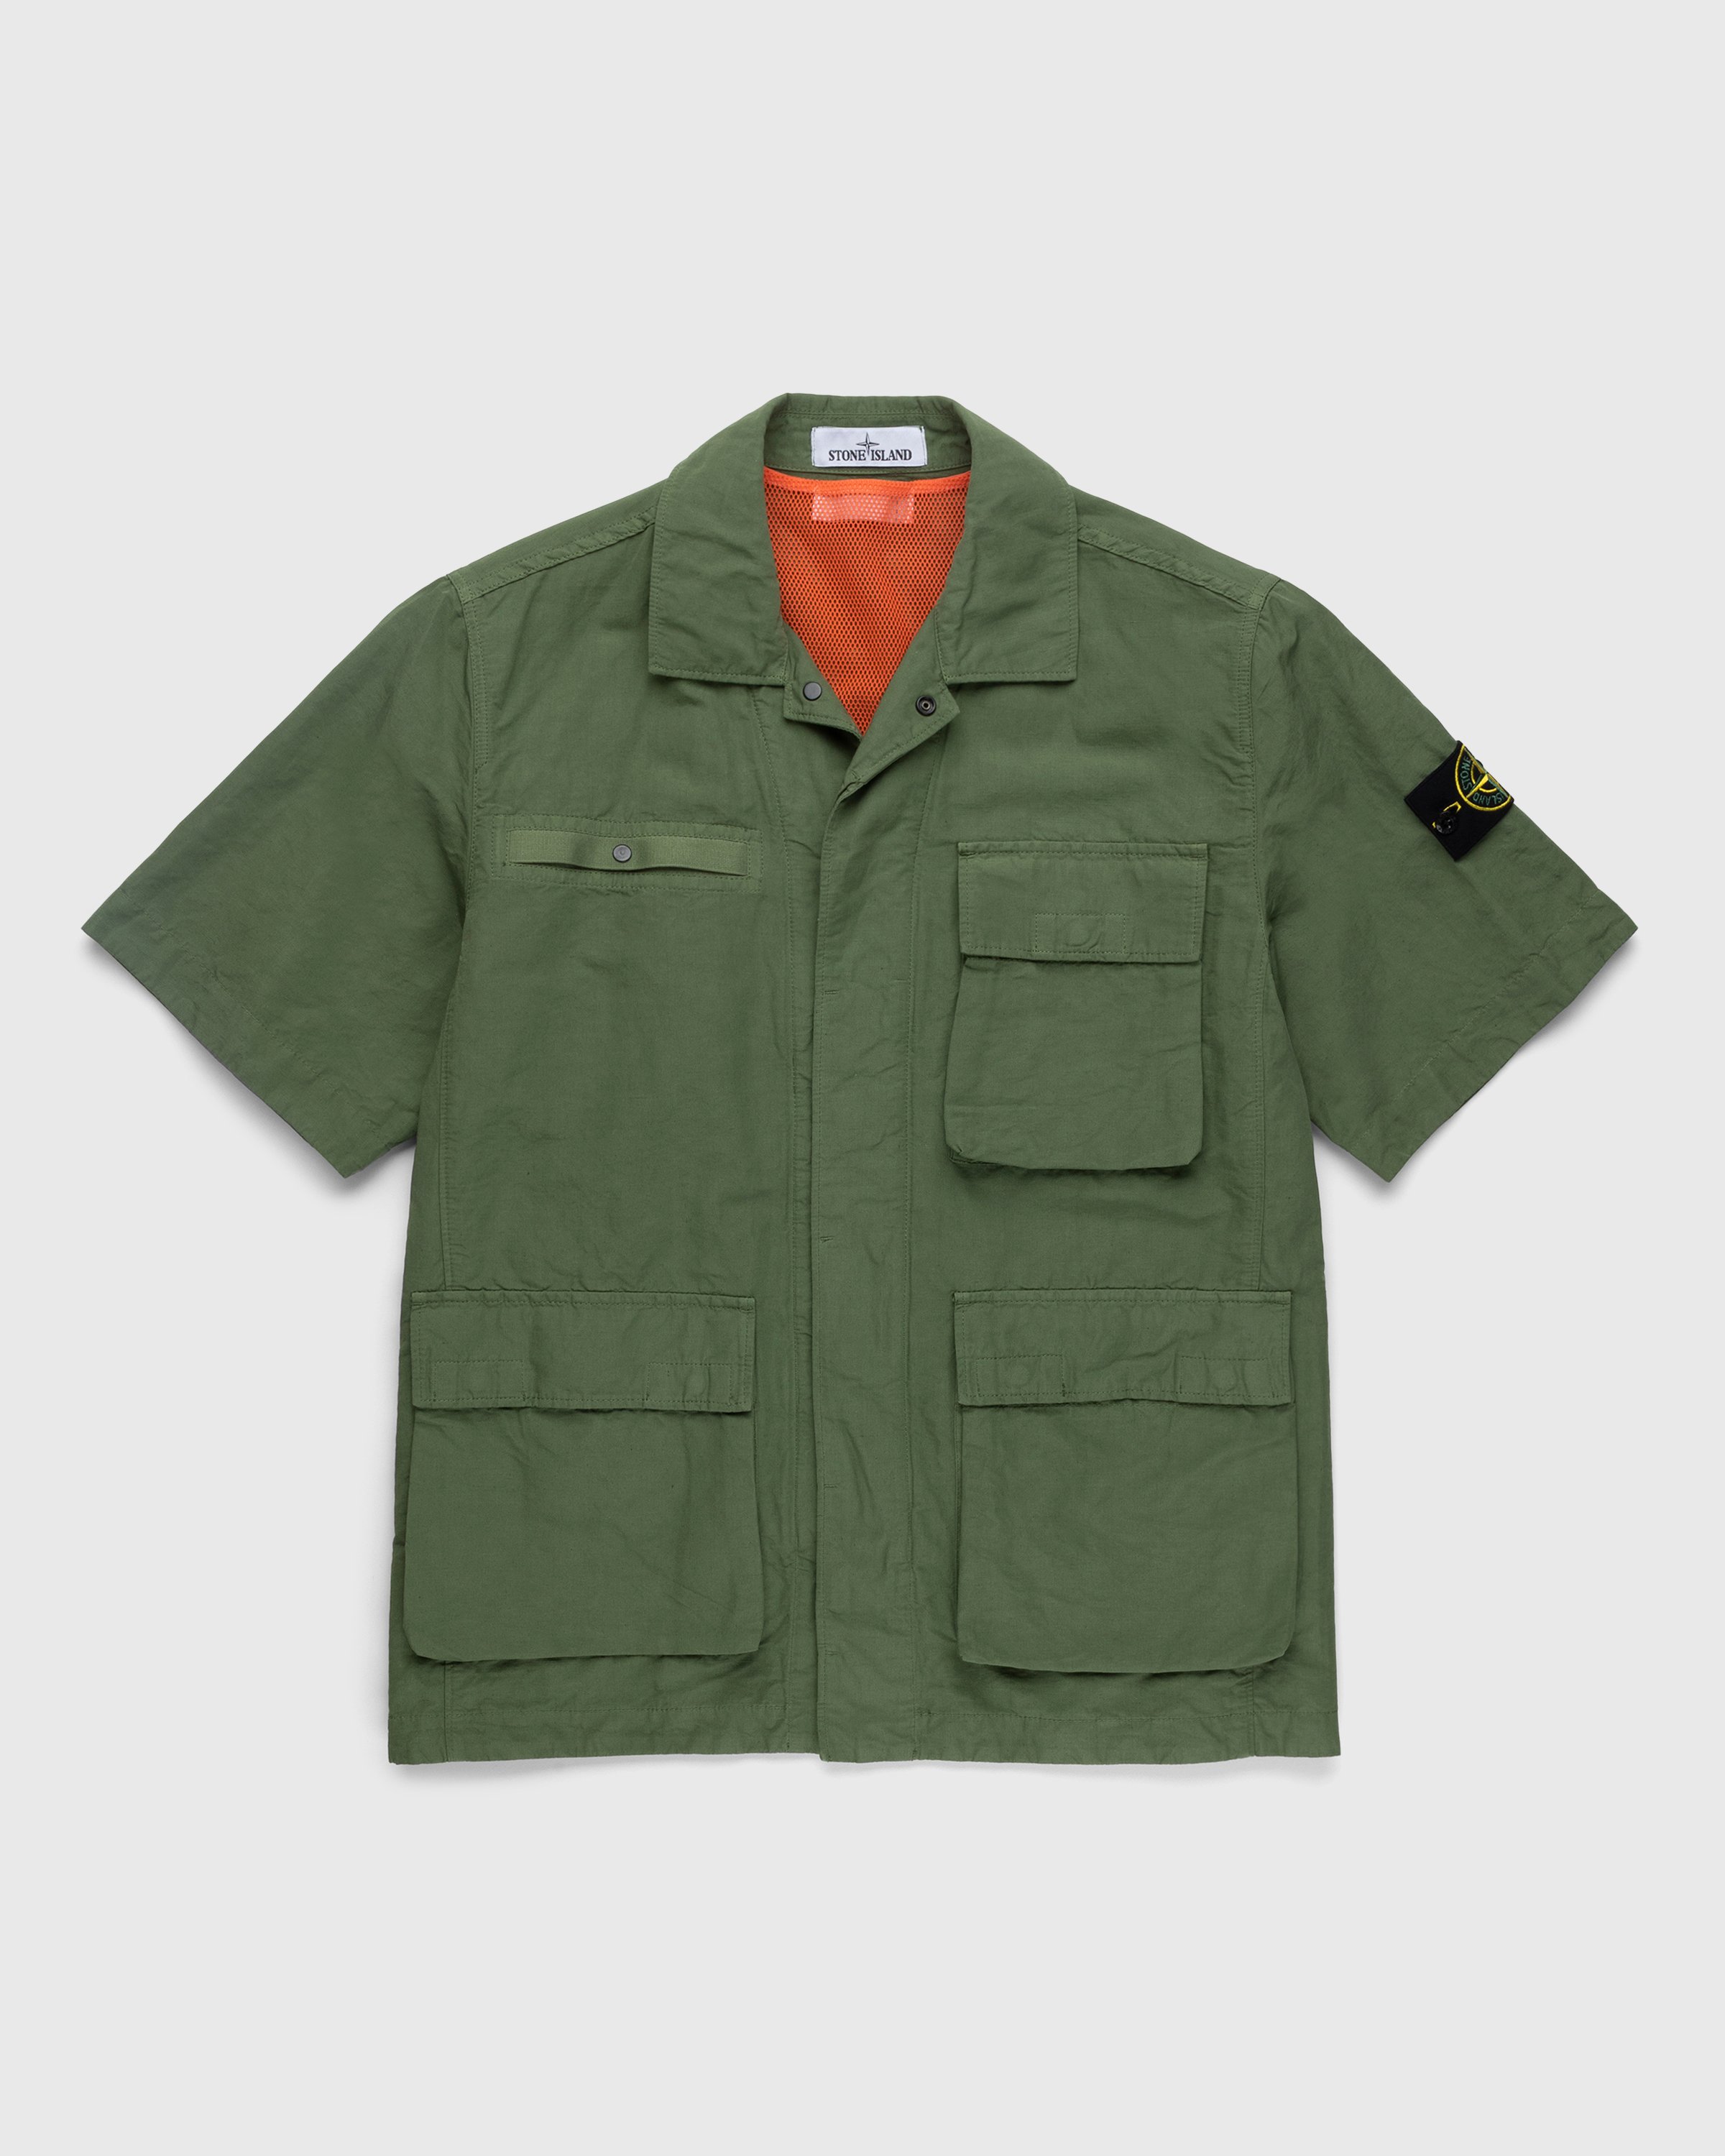 Stone Island - 42406 Garment-Dyed Shirt Jacket With Detachable Vest Olive - Clothing - Green - Image 1